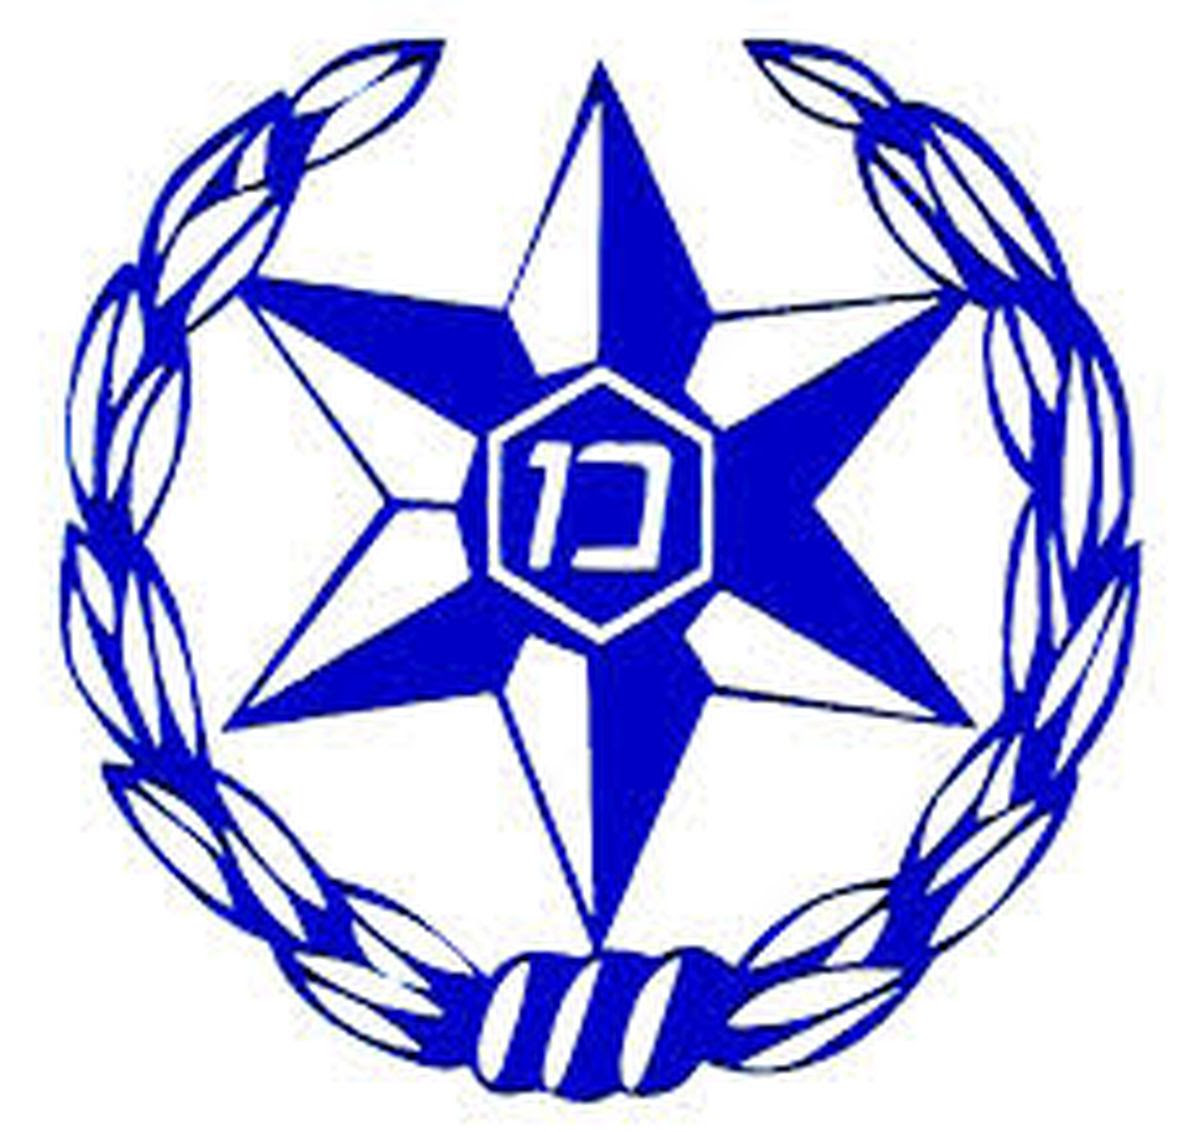 Israel police logo